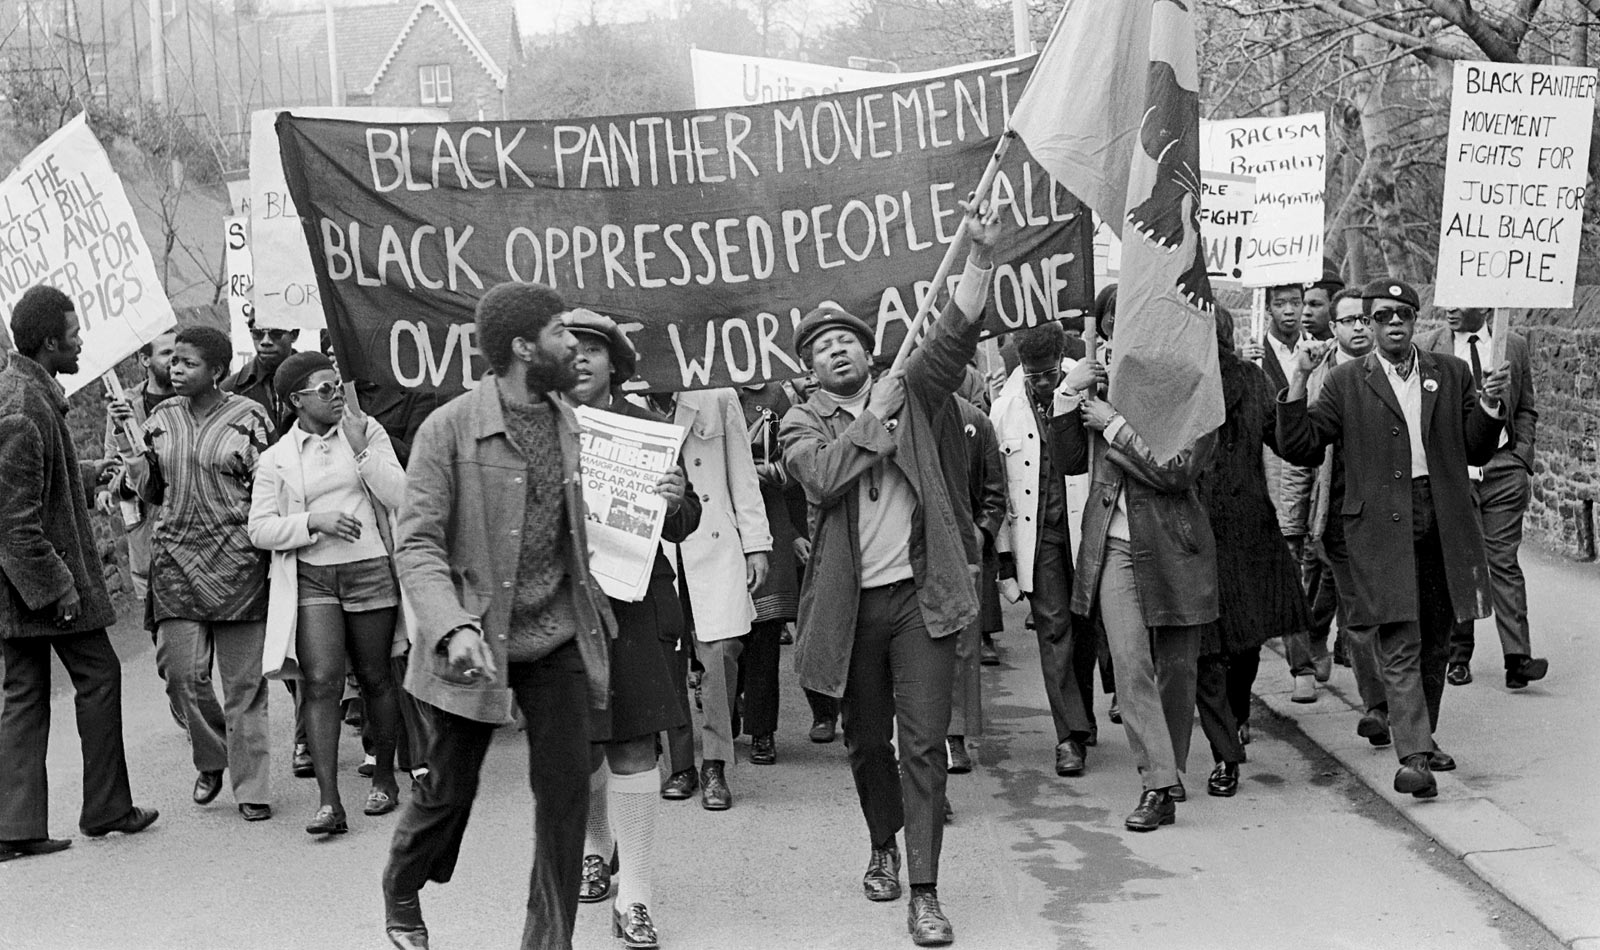 Neil Kenlock, Black Panther Demonstration, London, 1970s